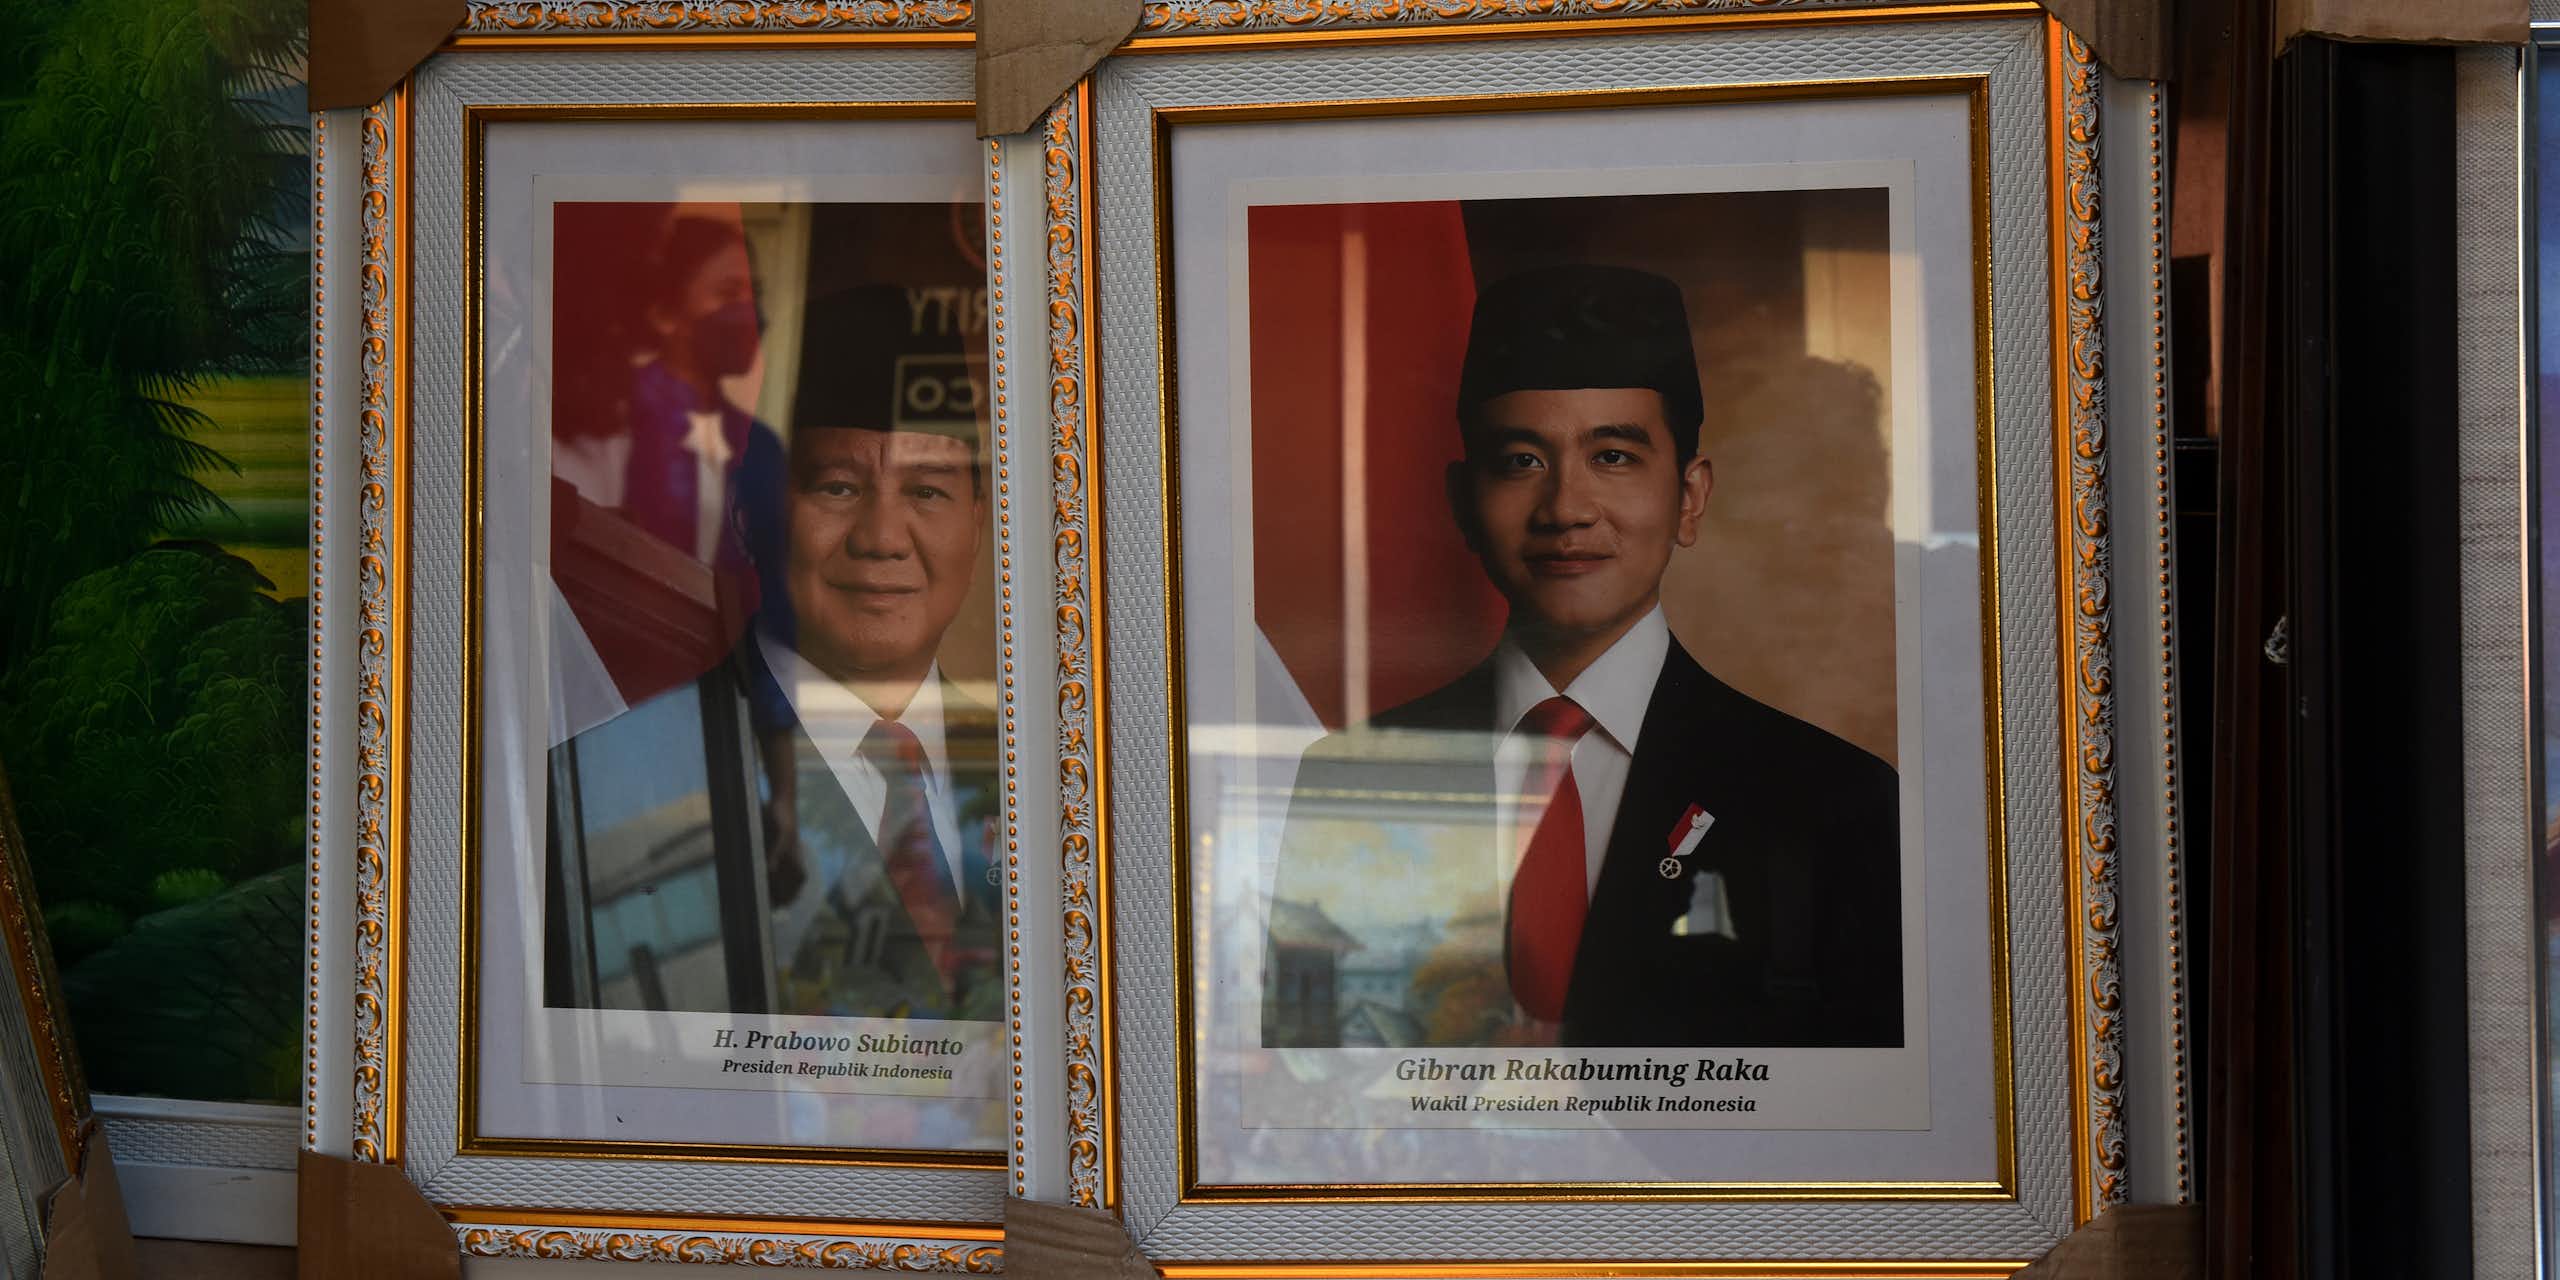 Manuver etika Jokowi, Prabowo dan Gibran: gambaran sikap ‘Machiavellian’ dalam politik praktis